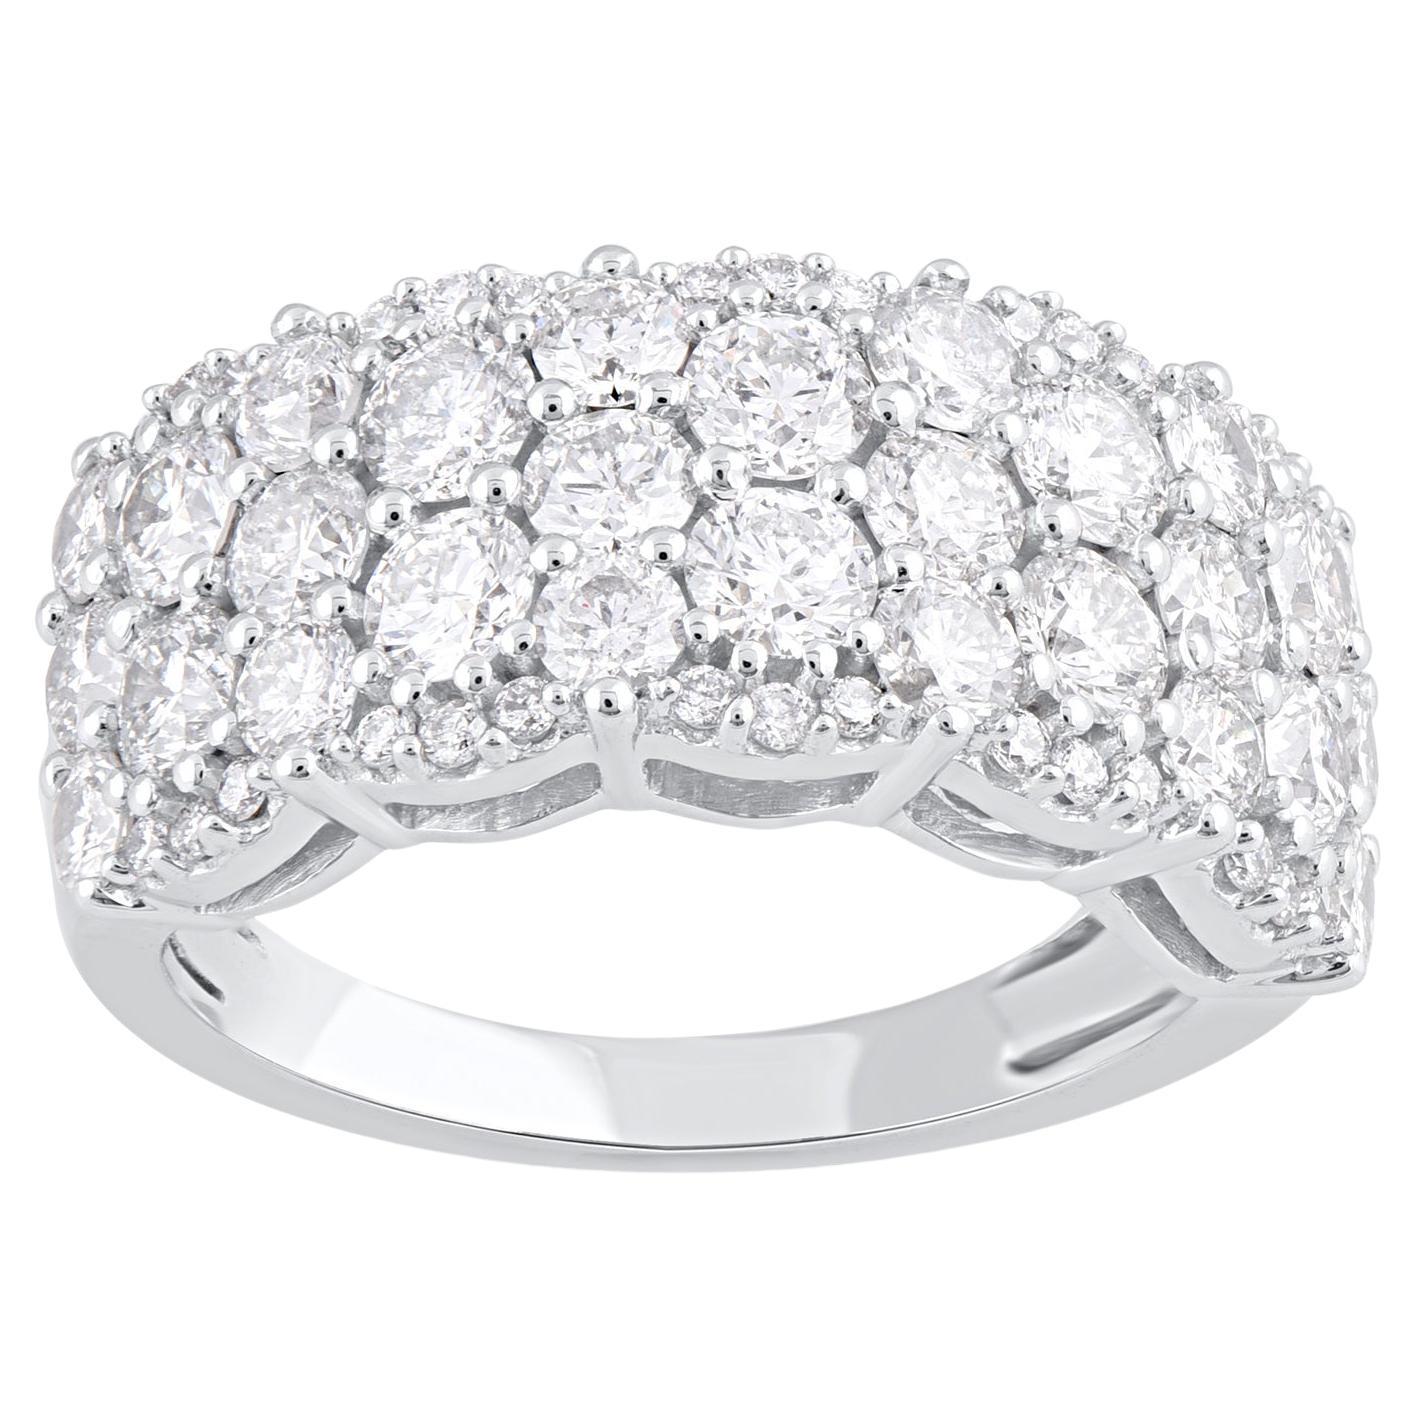 TJD 3.0 Carat Brilliant Cut Diamond 14 Karat White Gold Wedding Band Ring For Sale